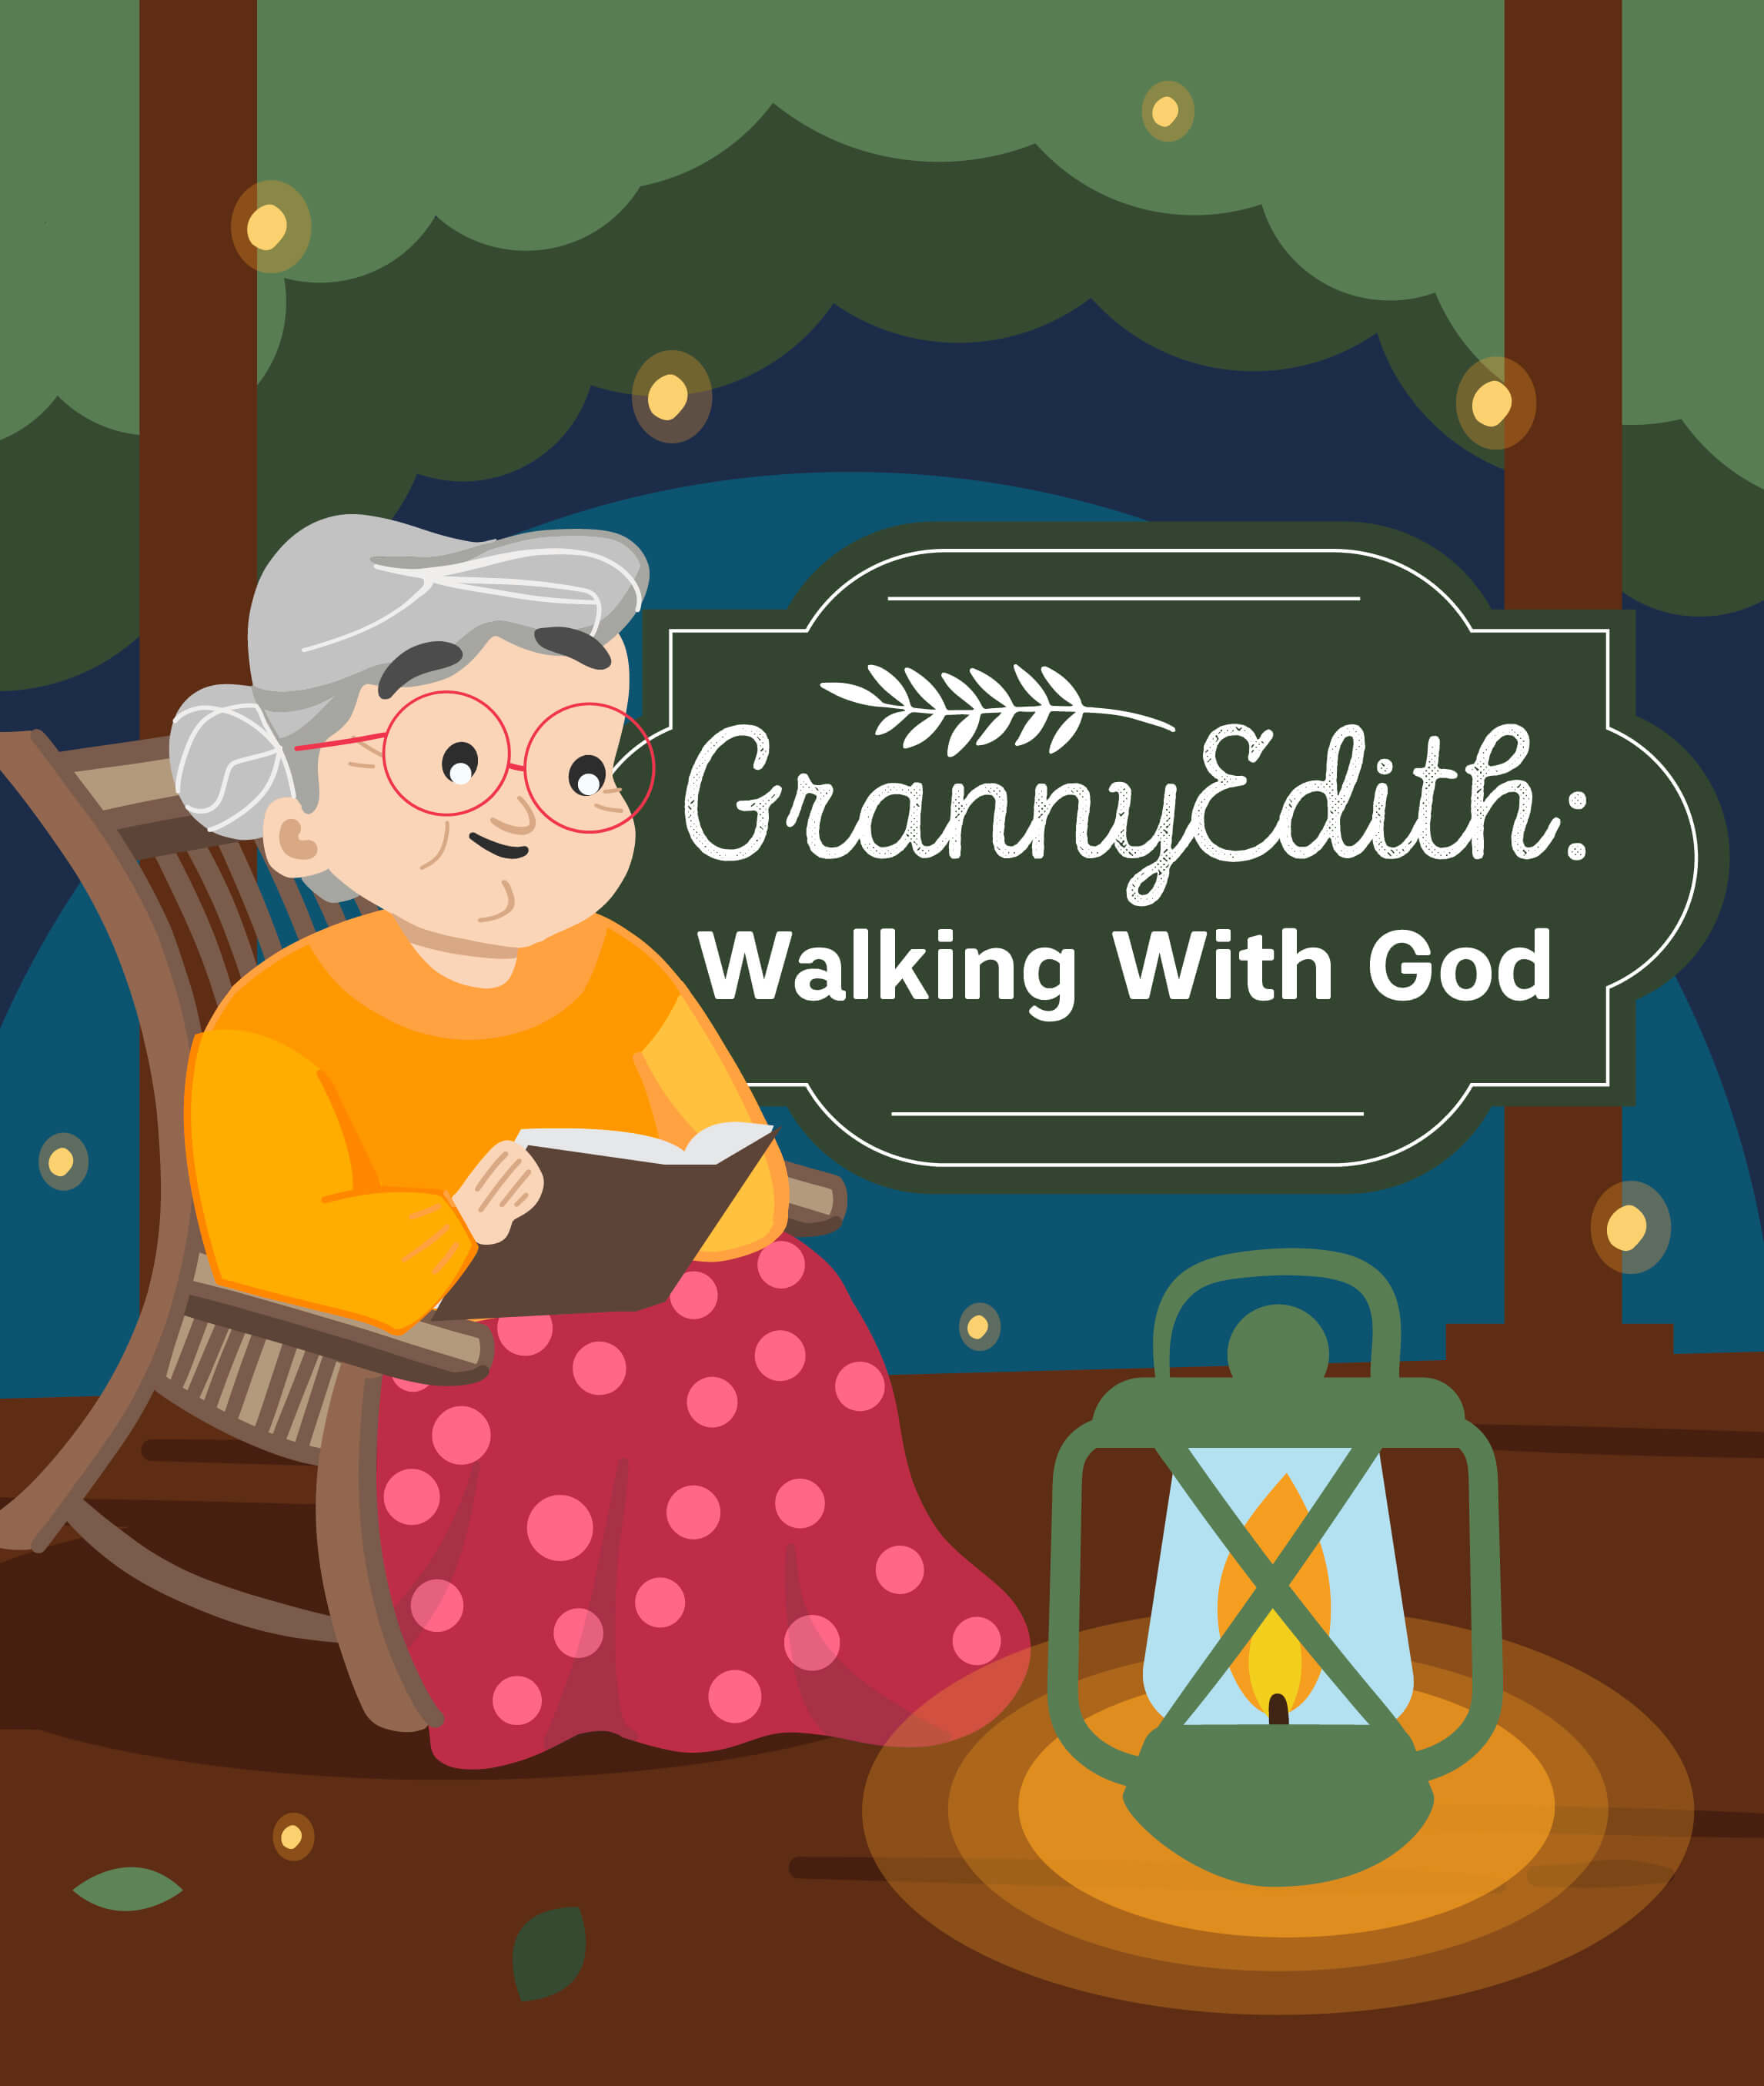 Granny Edith: Walking With God